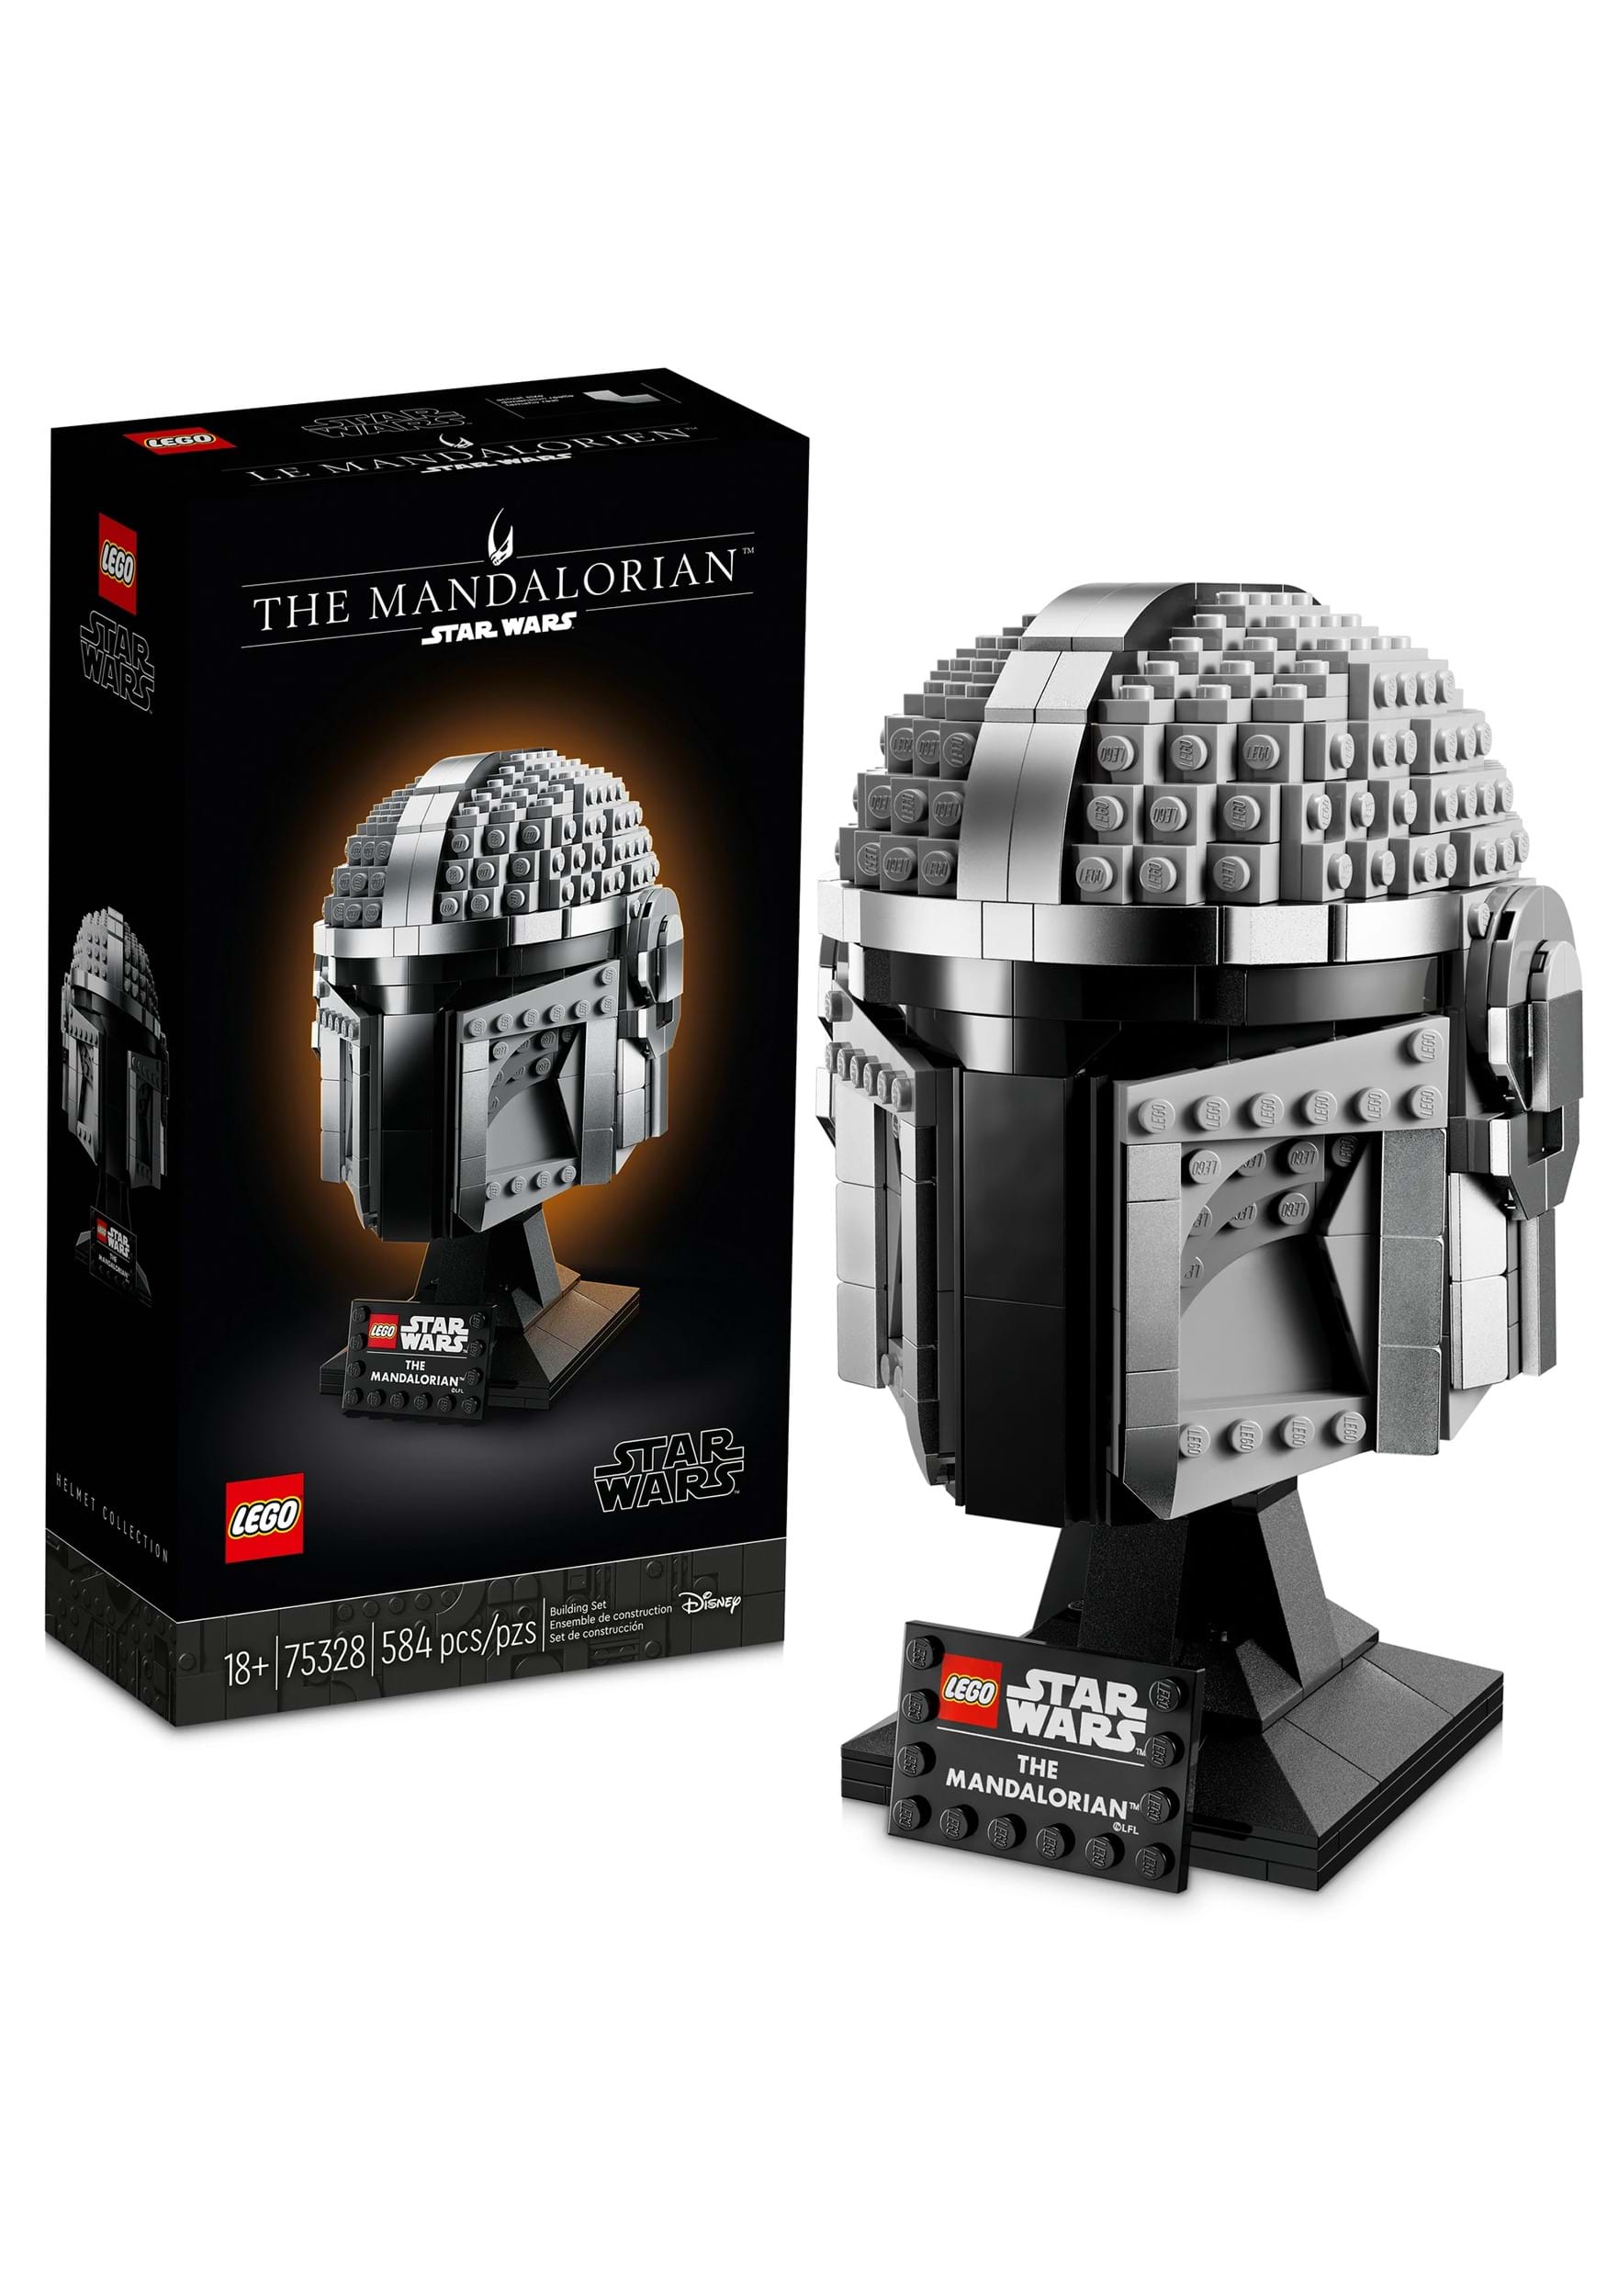 LEGO Star Wars The Mandalorian Helmet Building Kit